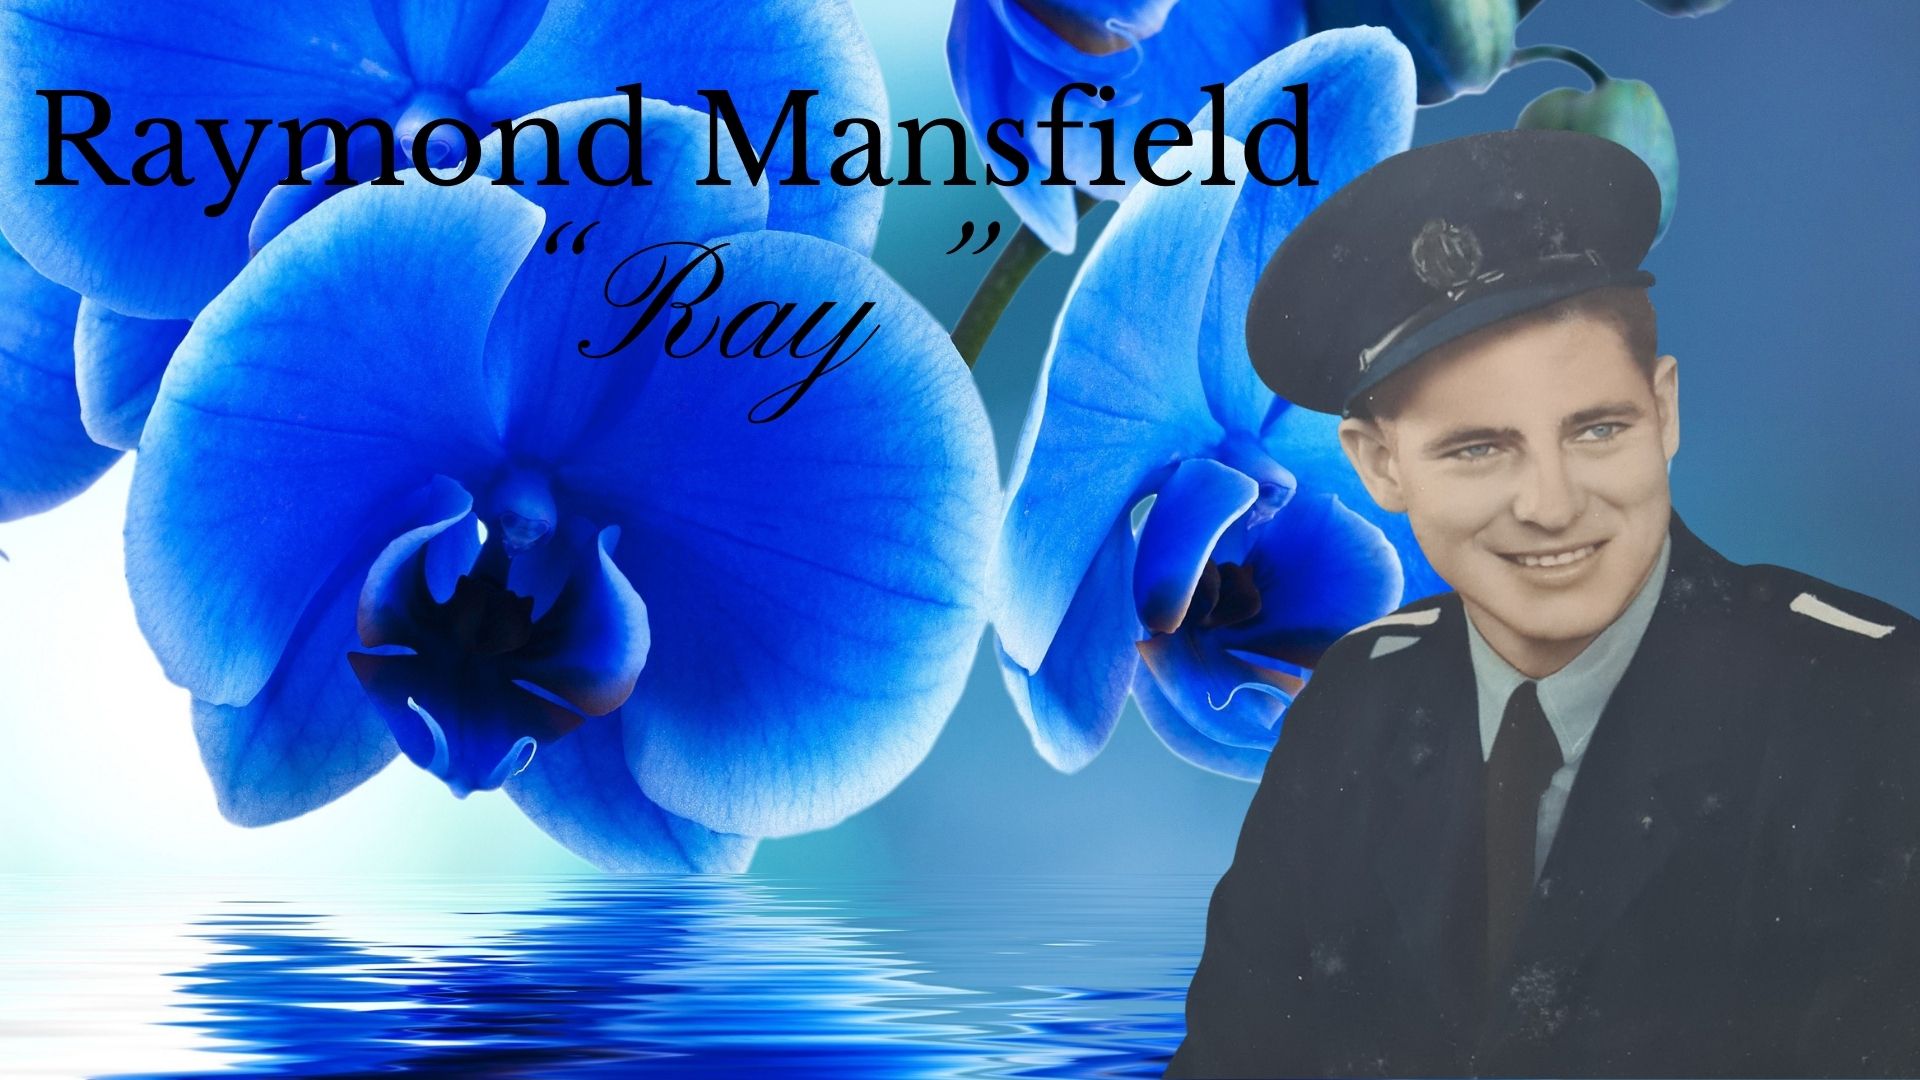 Raymond James Mansfield